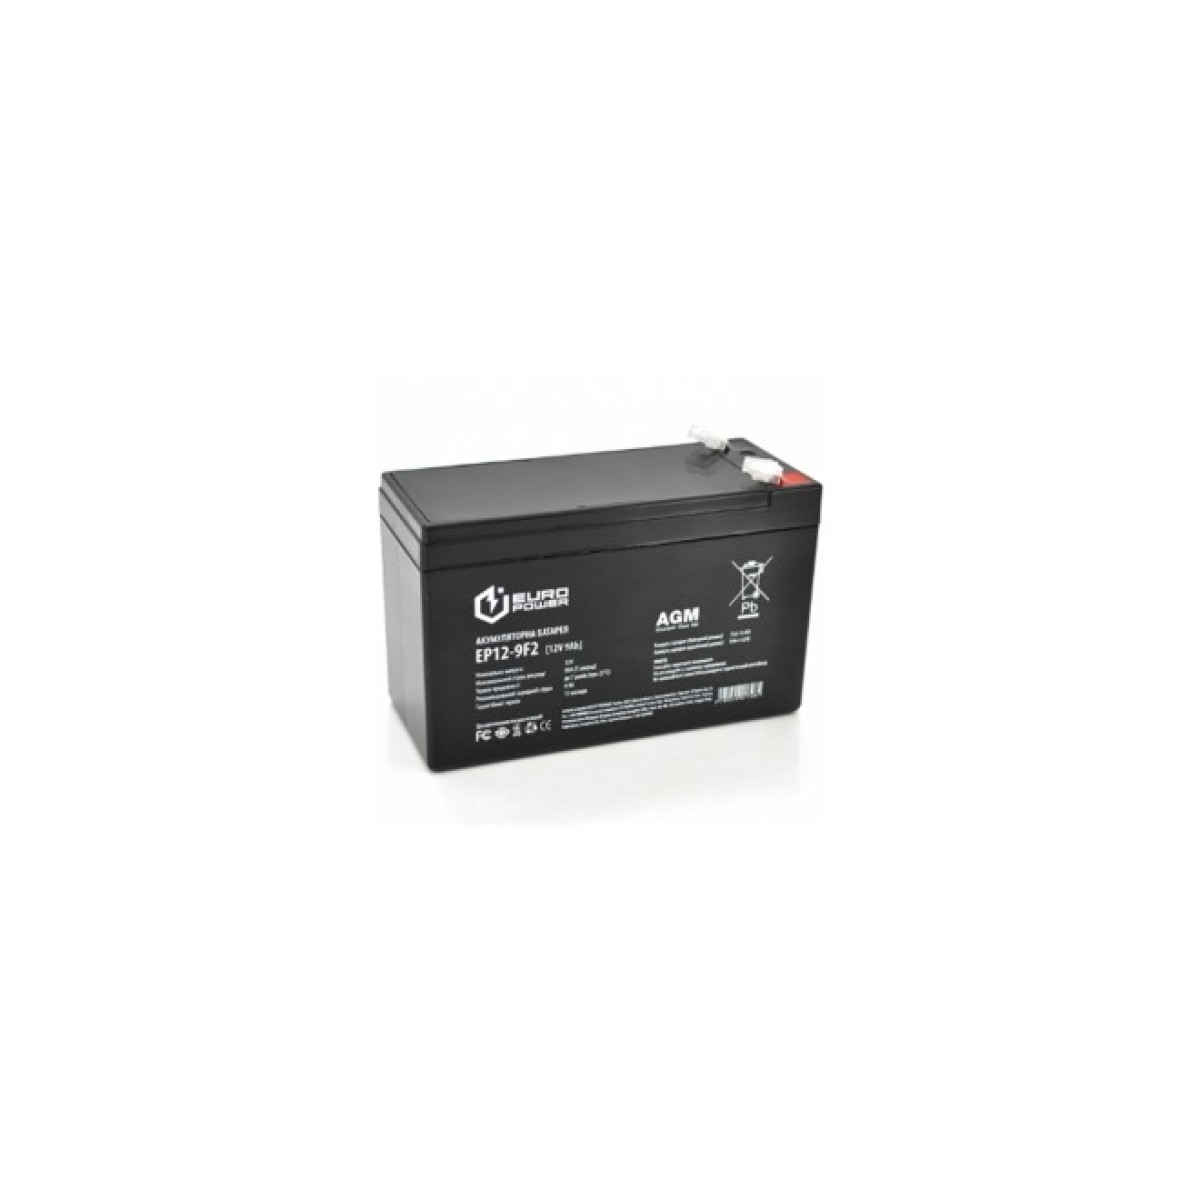 Батарея к ИБП Europower 12В 9Ач (EP12-9F2) 256_256.jpg